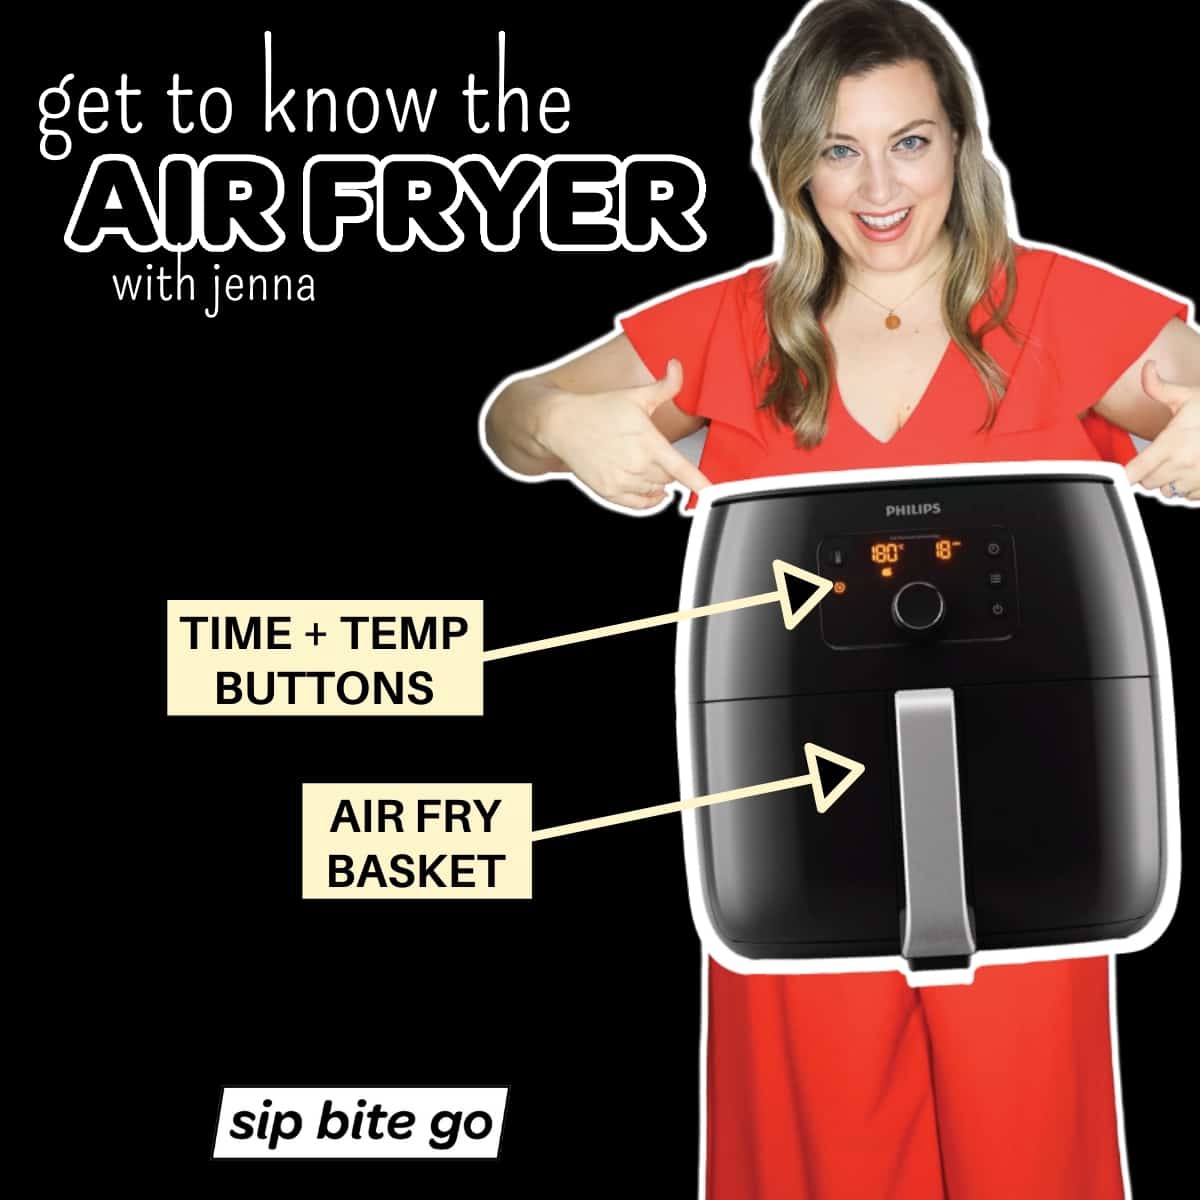 What Is an Air Fryer? - How Does an Air Fryer Work?